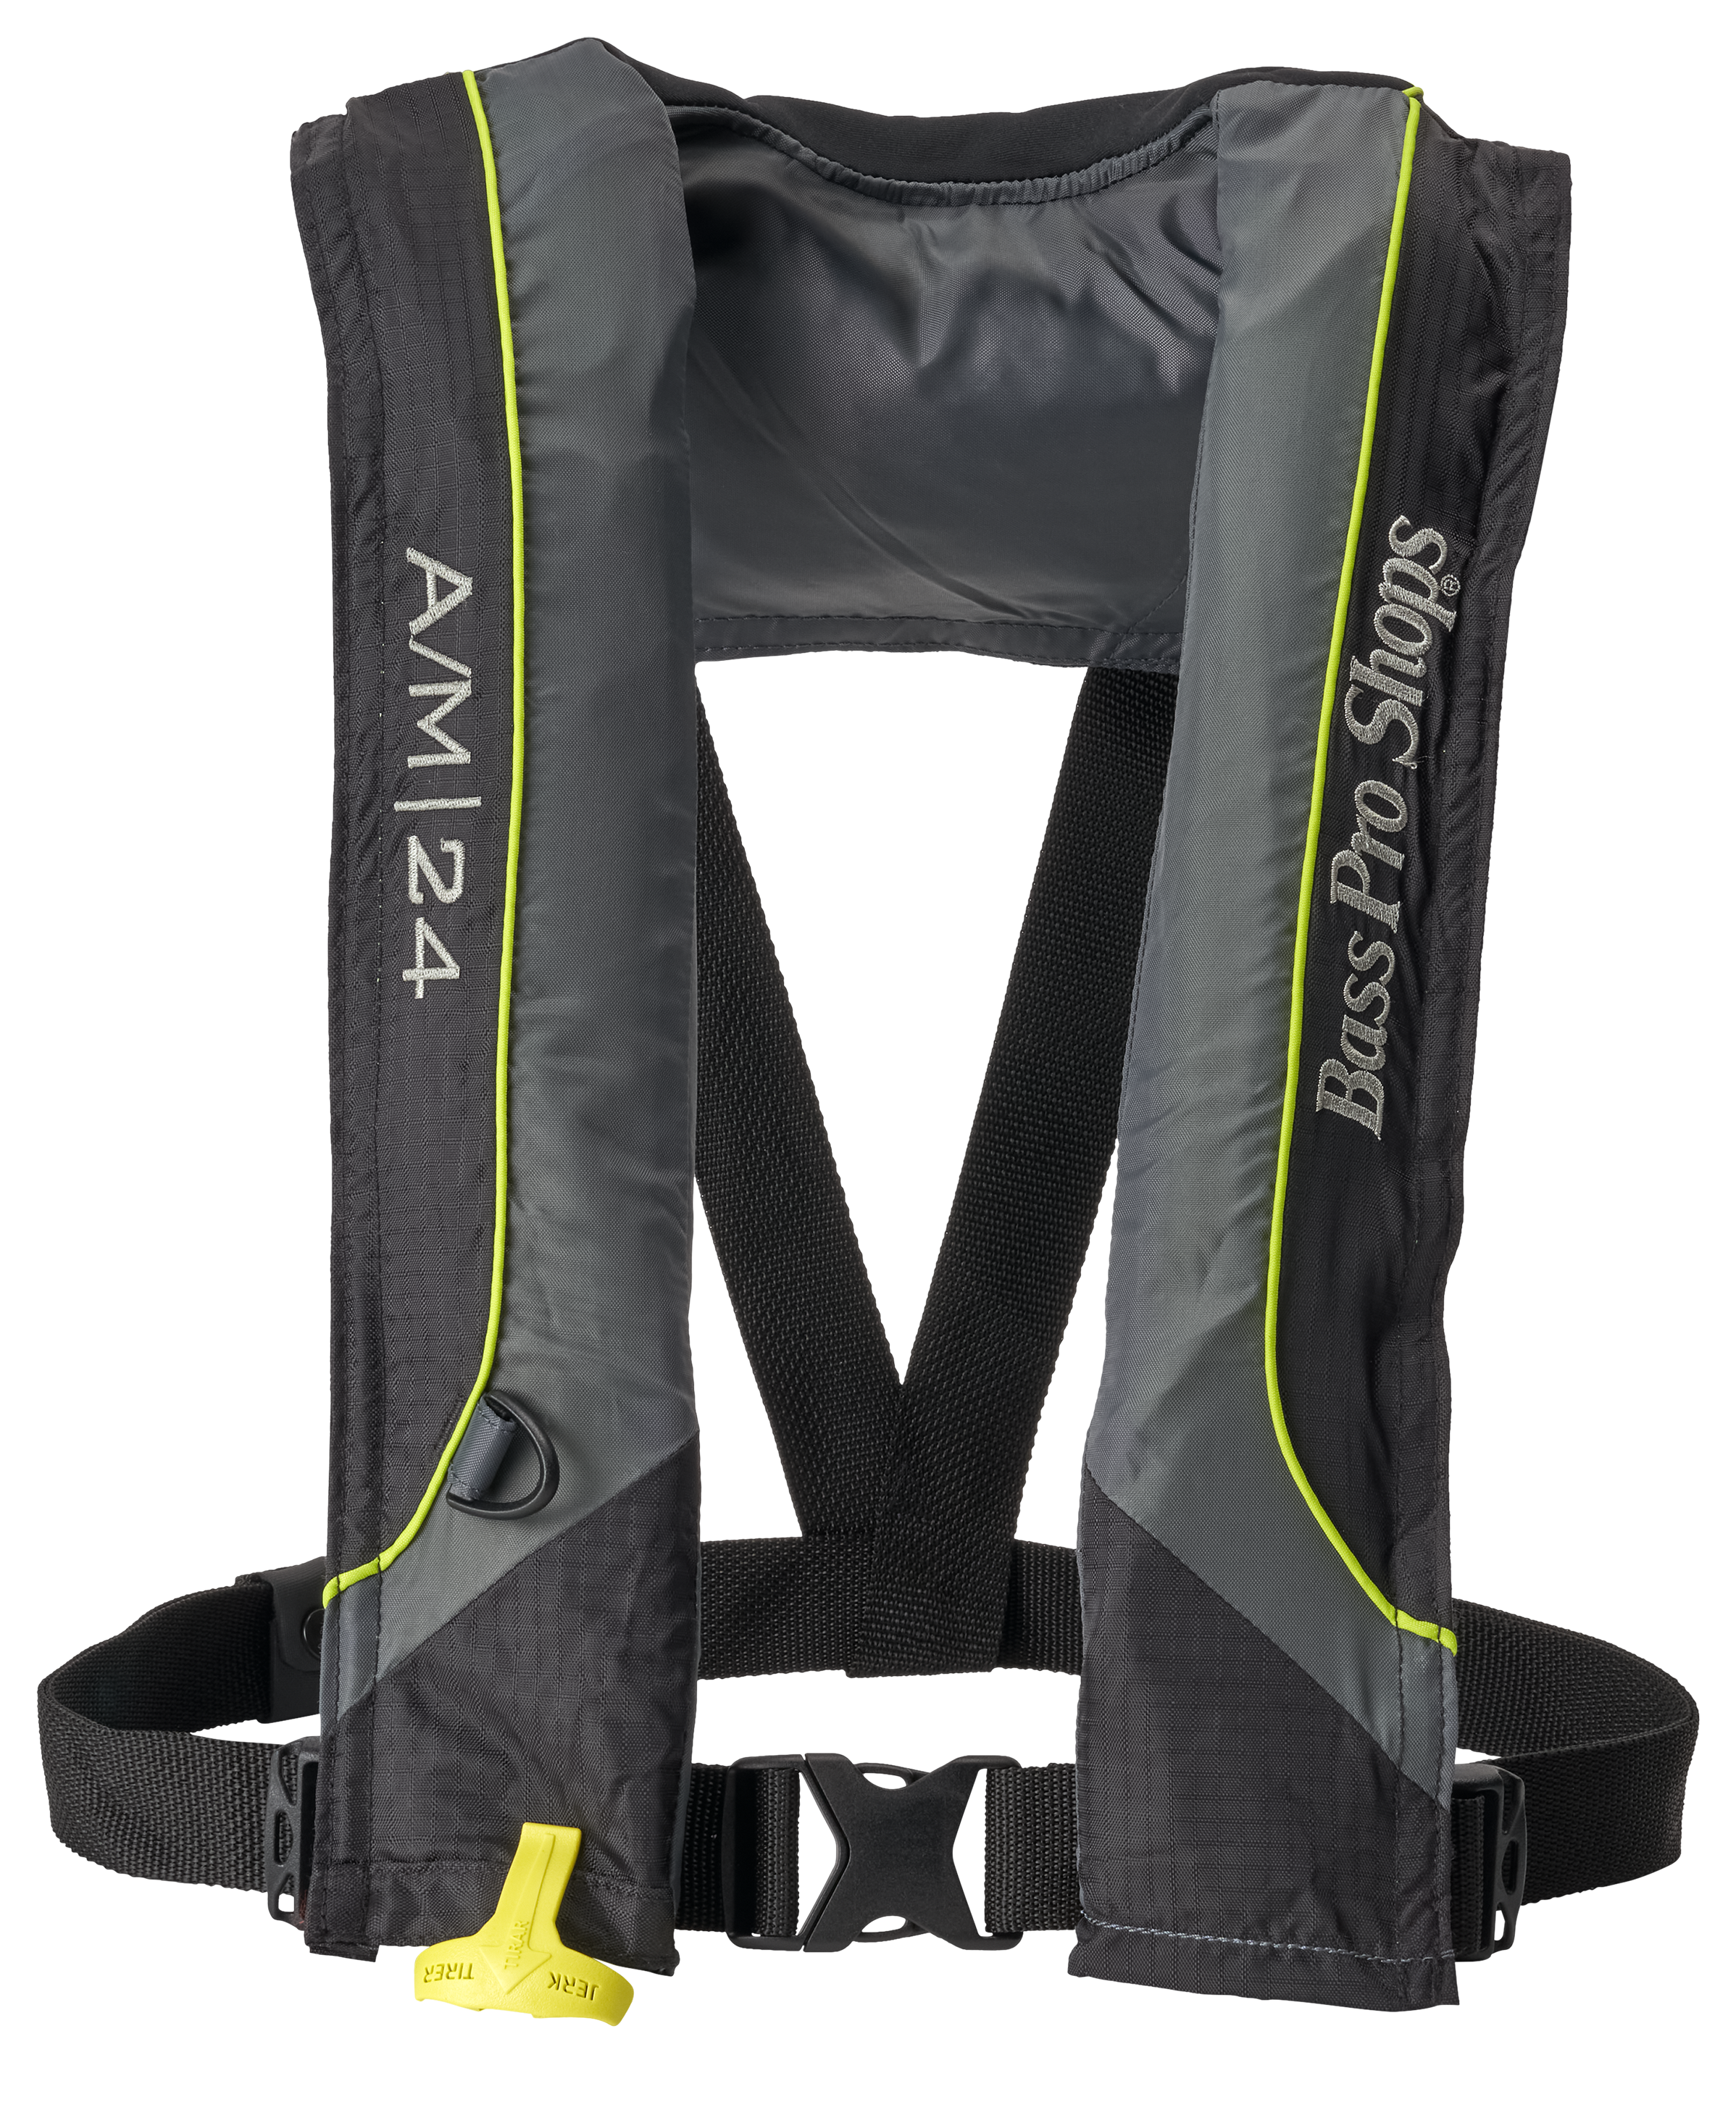 Bass Pro Shops AM24 Auto Manual Inflatable Life Vest - Black Gray Green